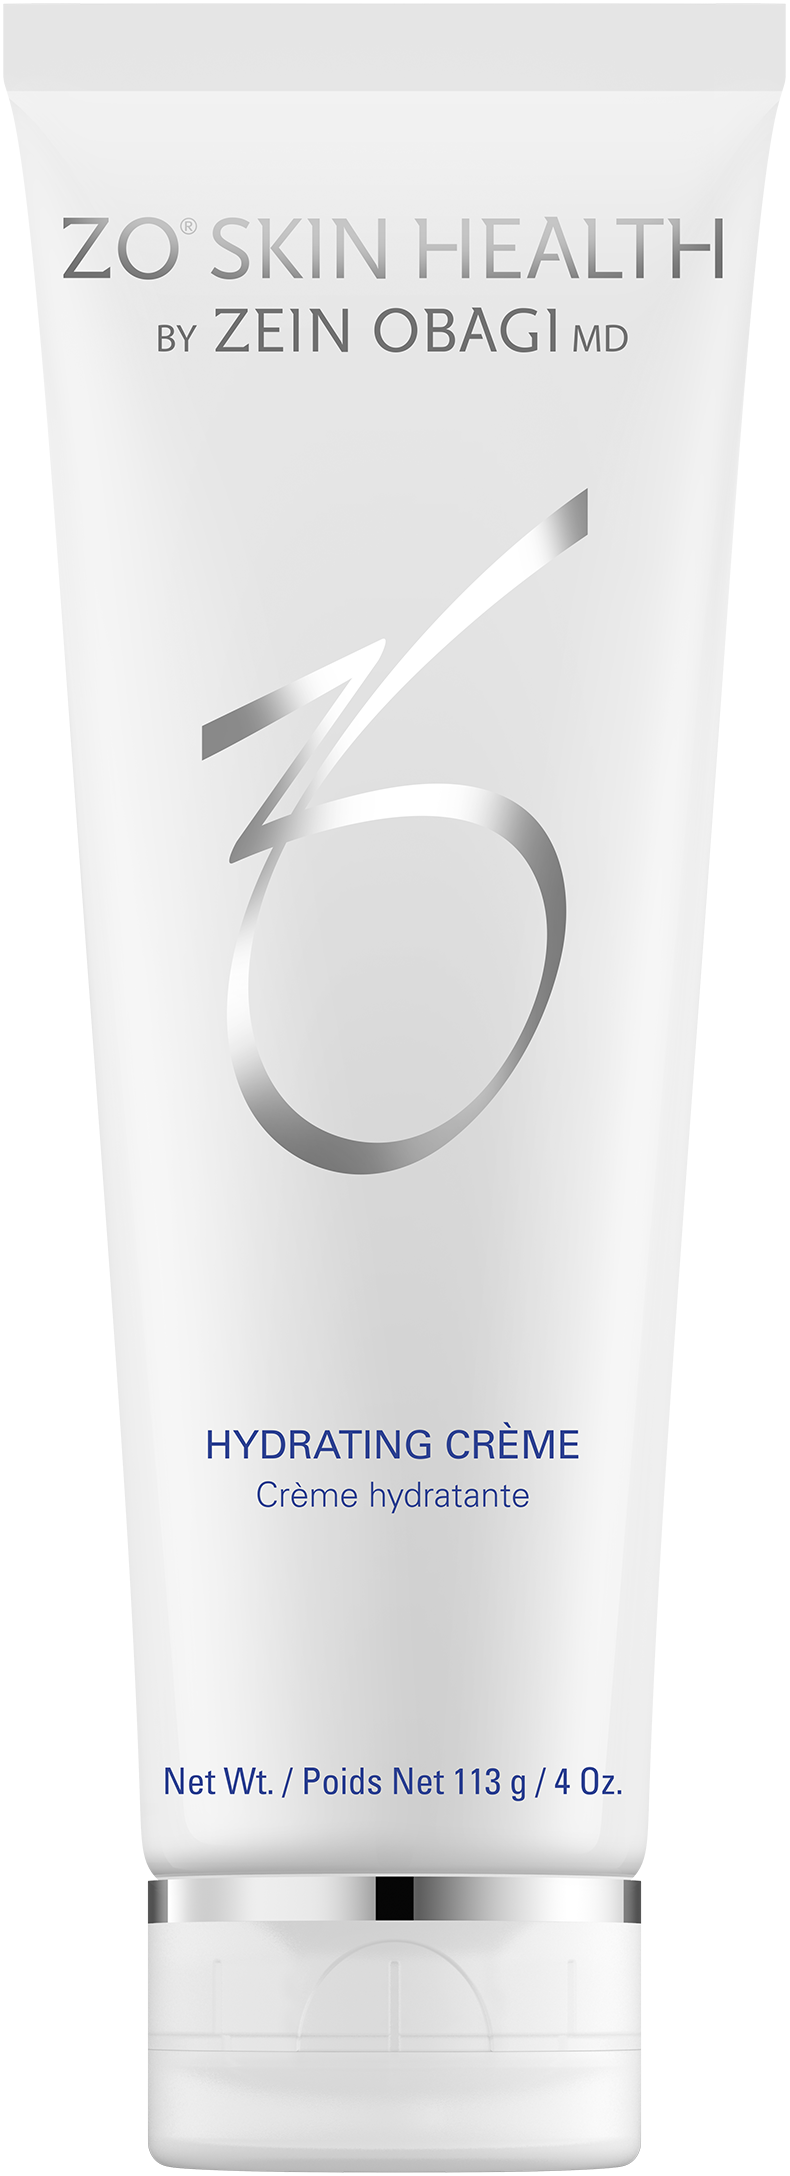 ZO Hydrating Creme - Avebelle Skin